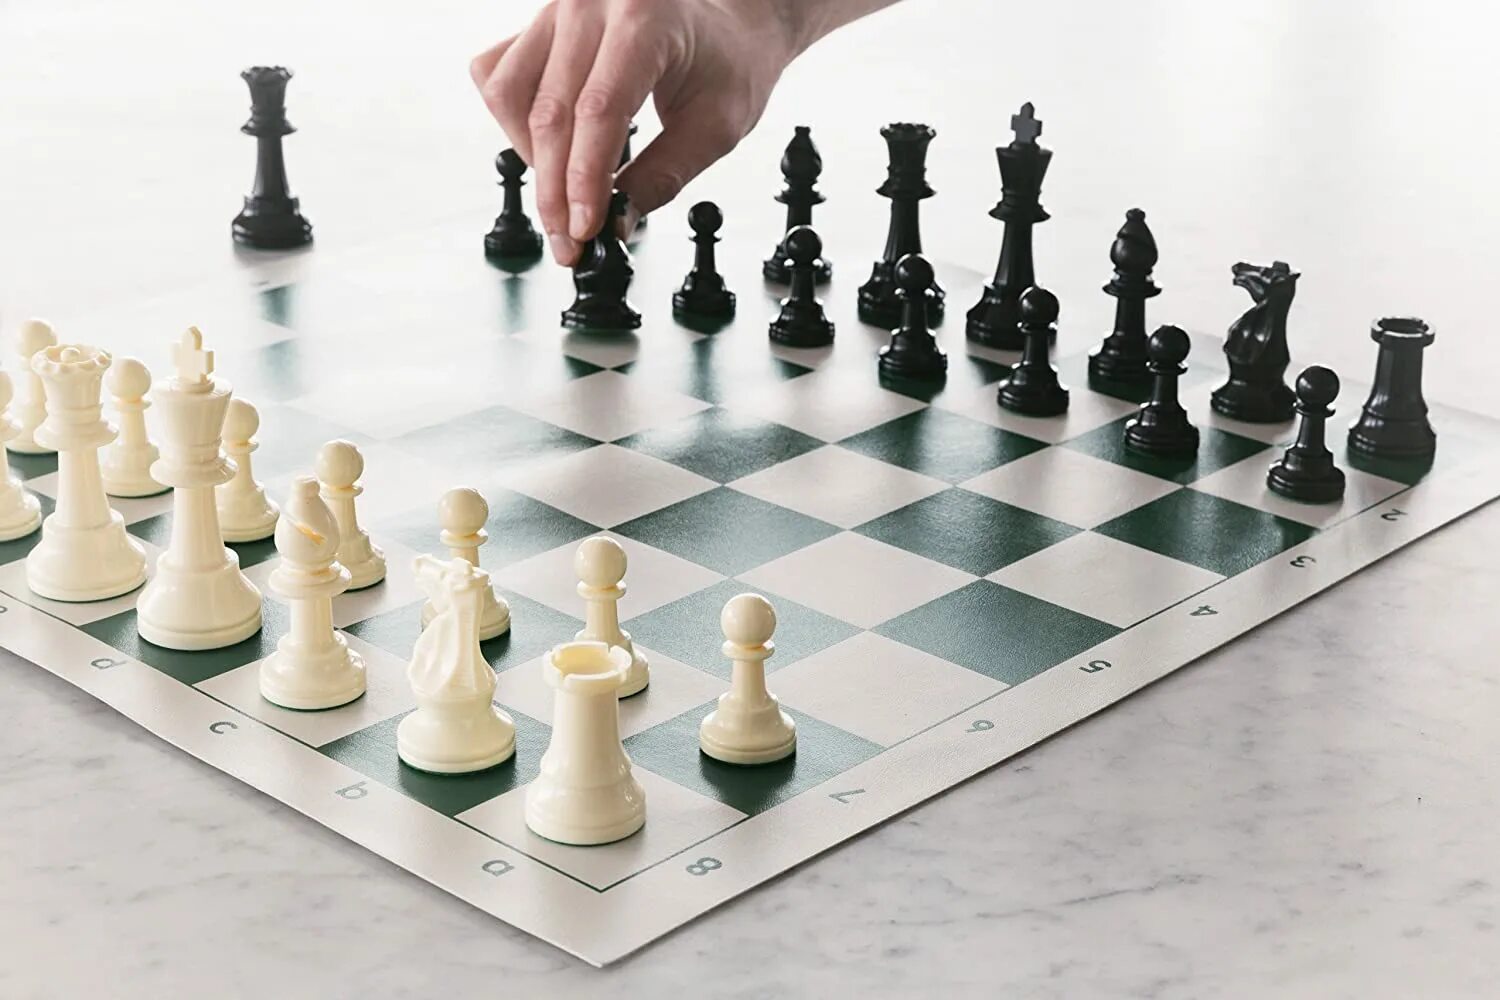 We like playing chess. Жизнь шахматная доска. Игра шахматы. Шахматное поле с фигурами. Люди на шахматной доске.